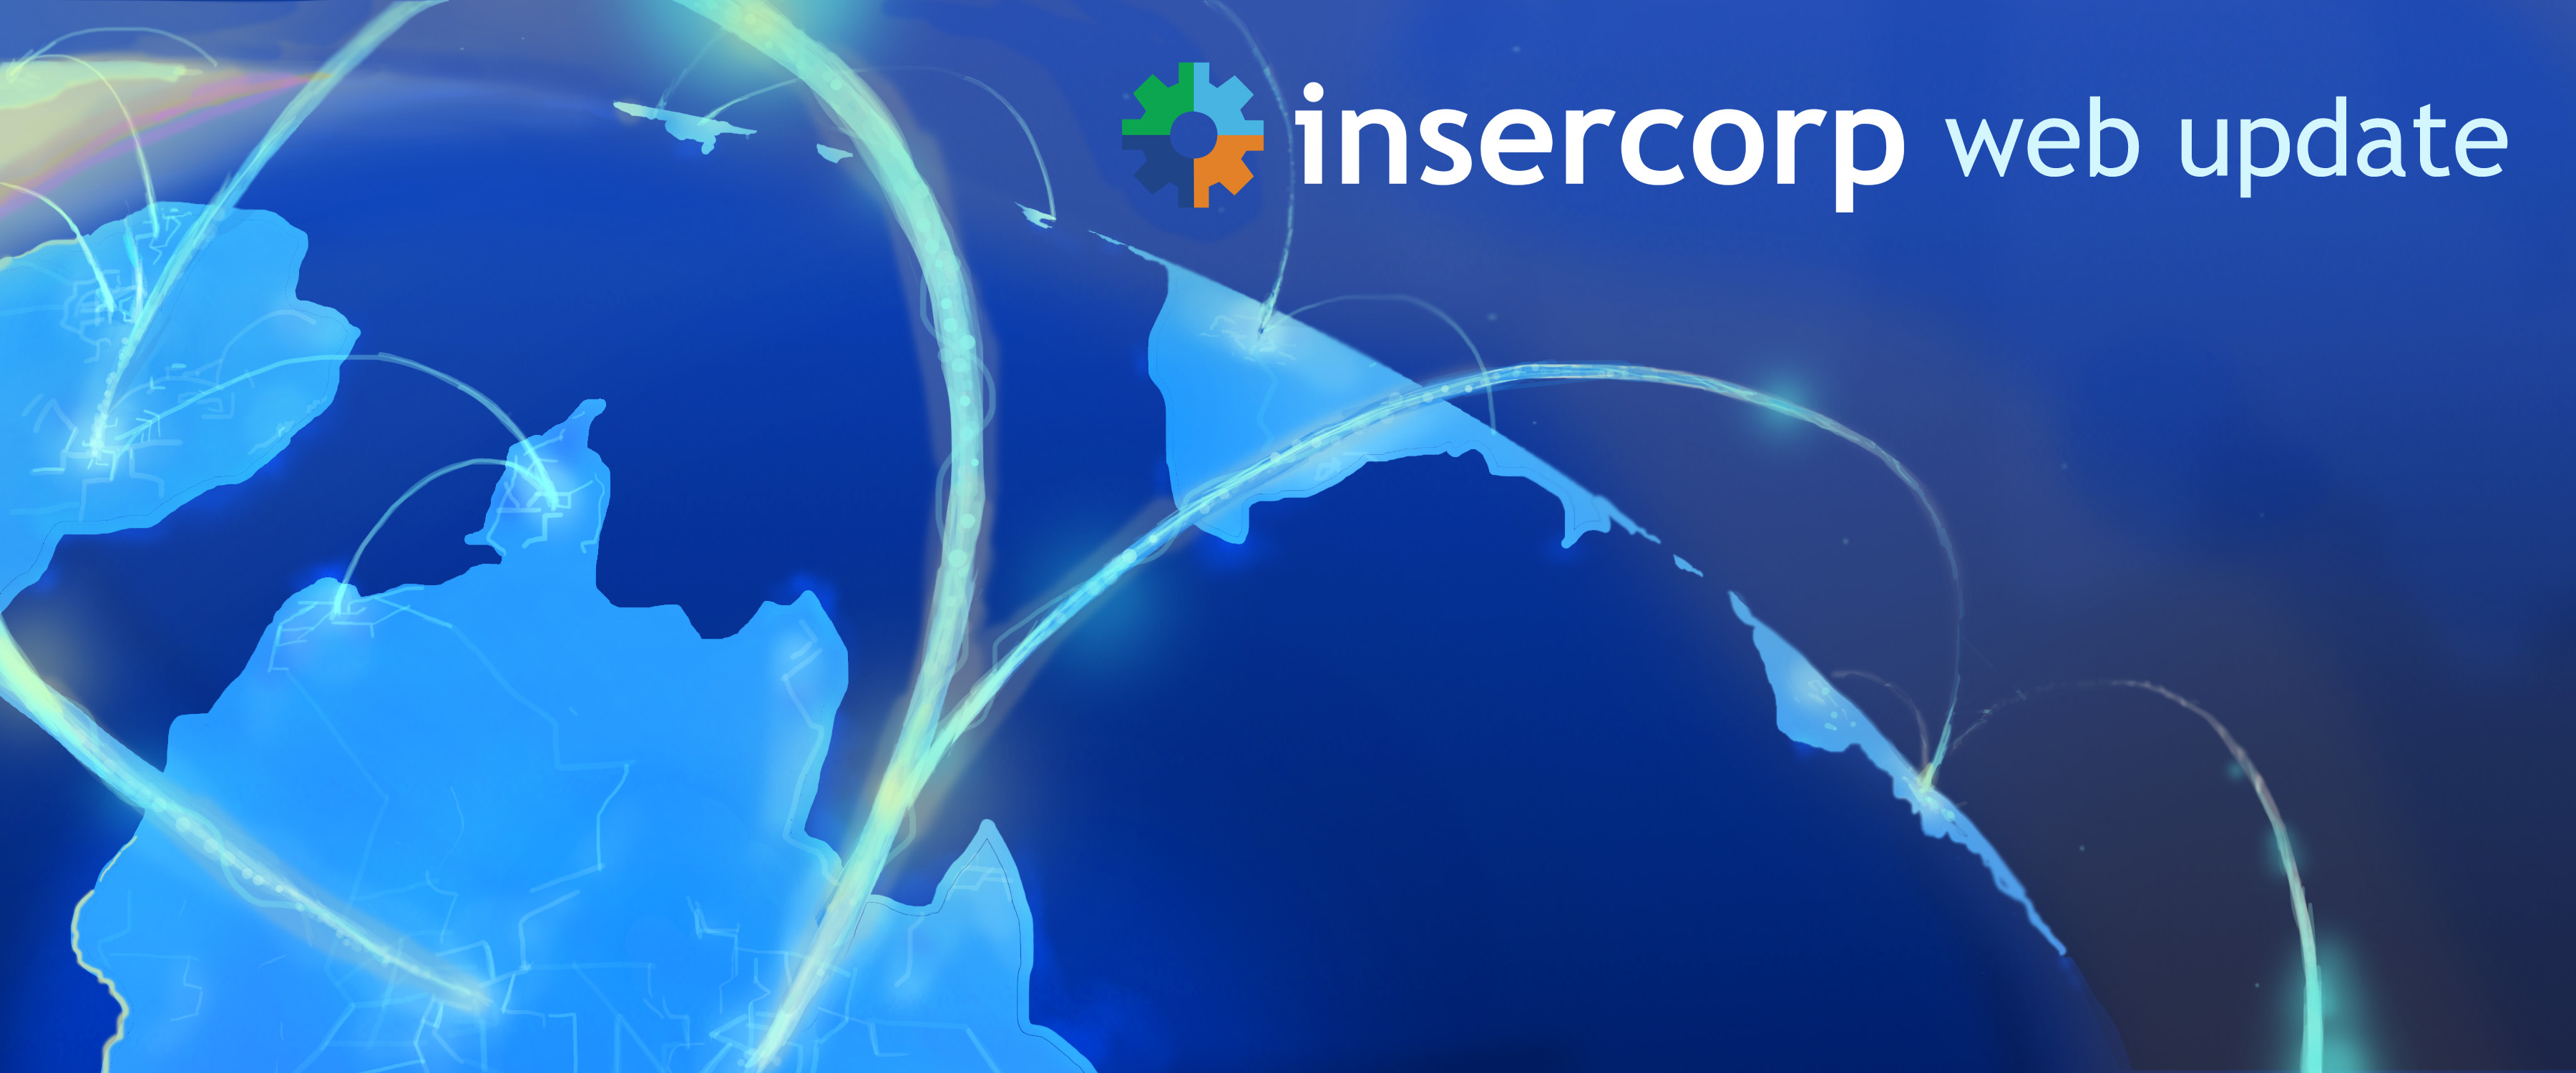 Insercorp Launches Jobs.EnvironmentalCareer.com!